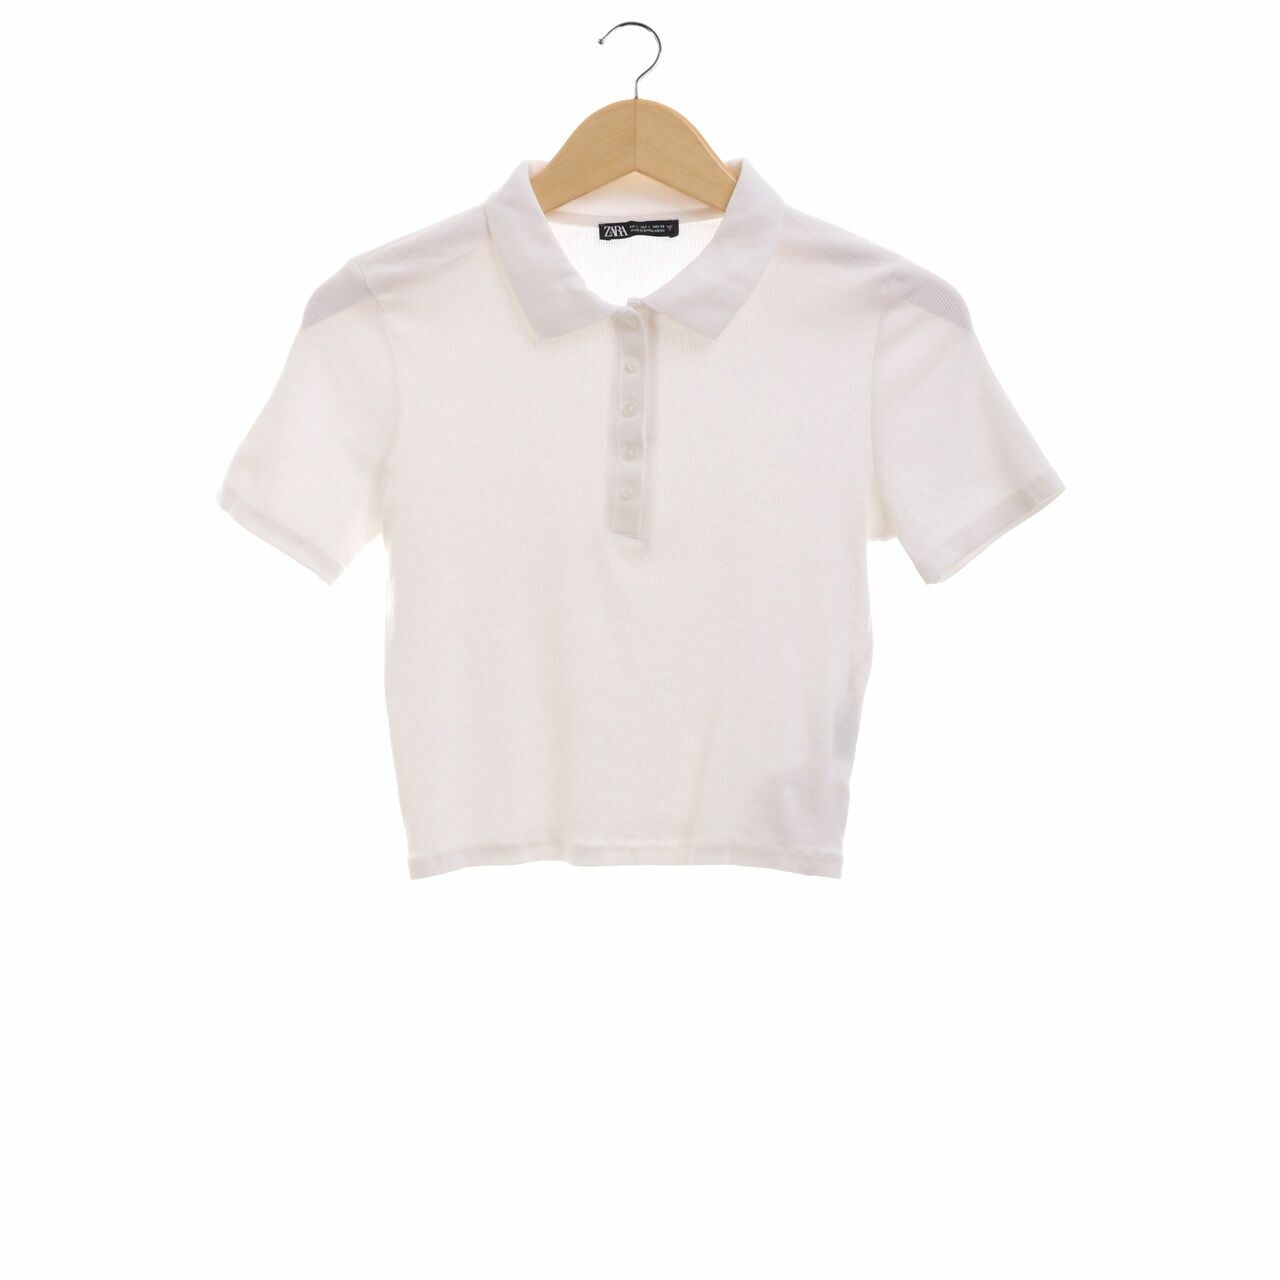 Zara Off White Polo T-Shirt